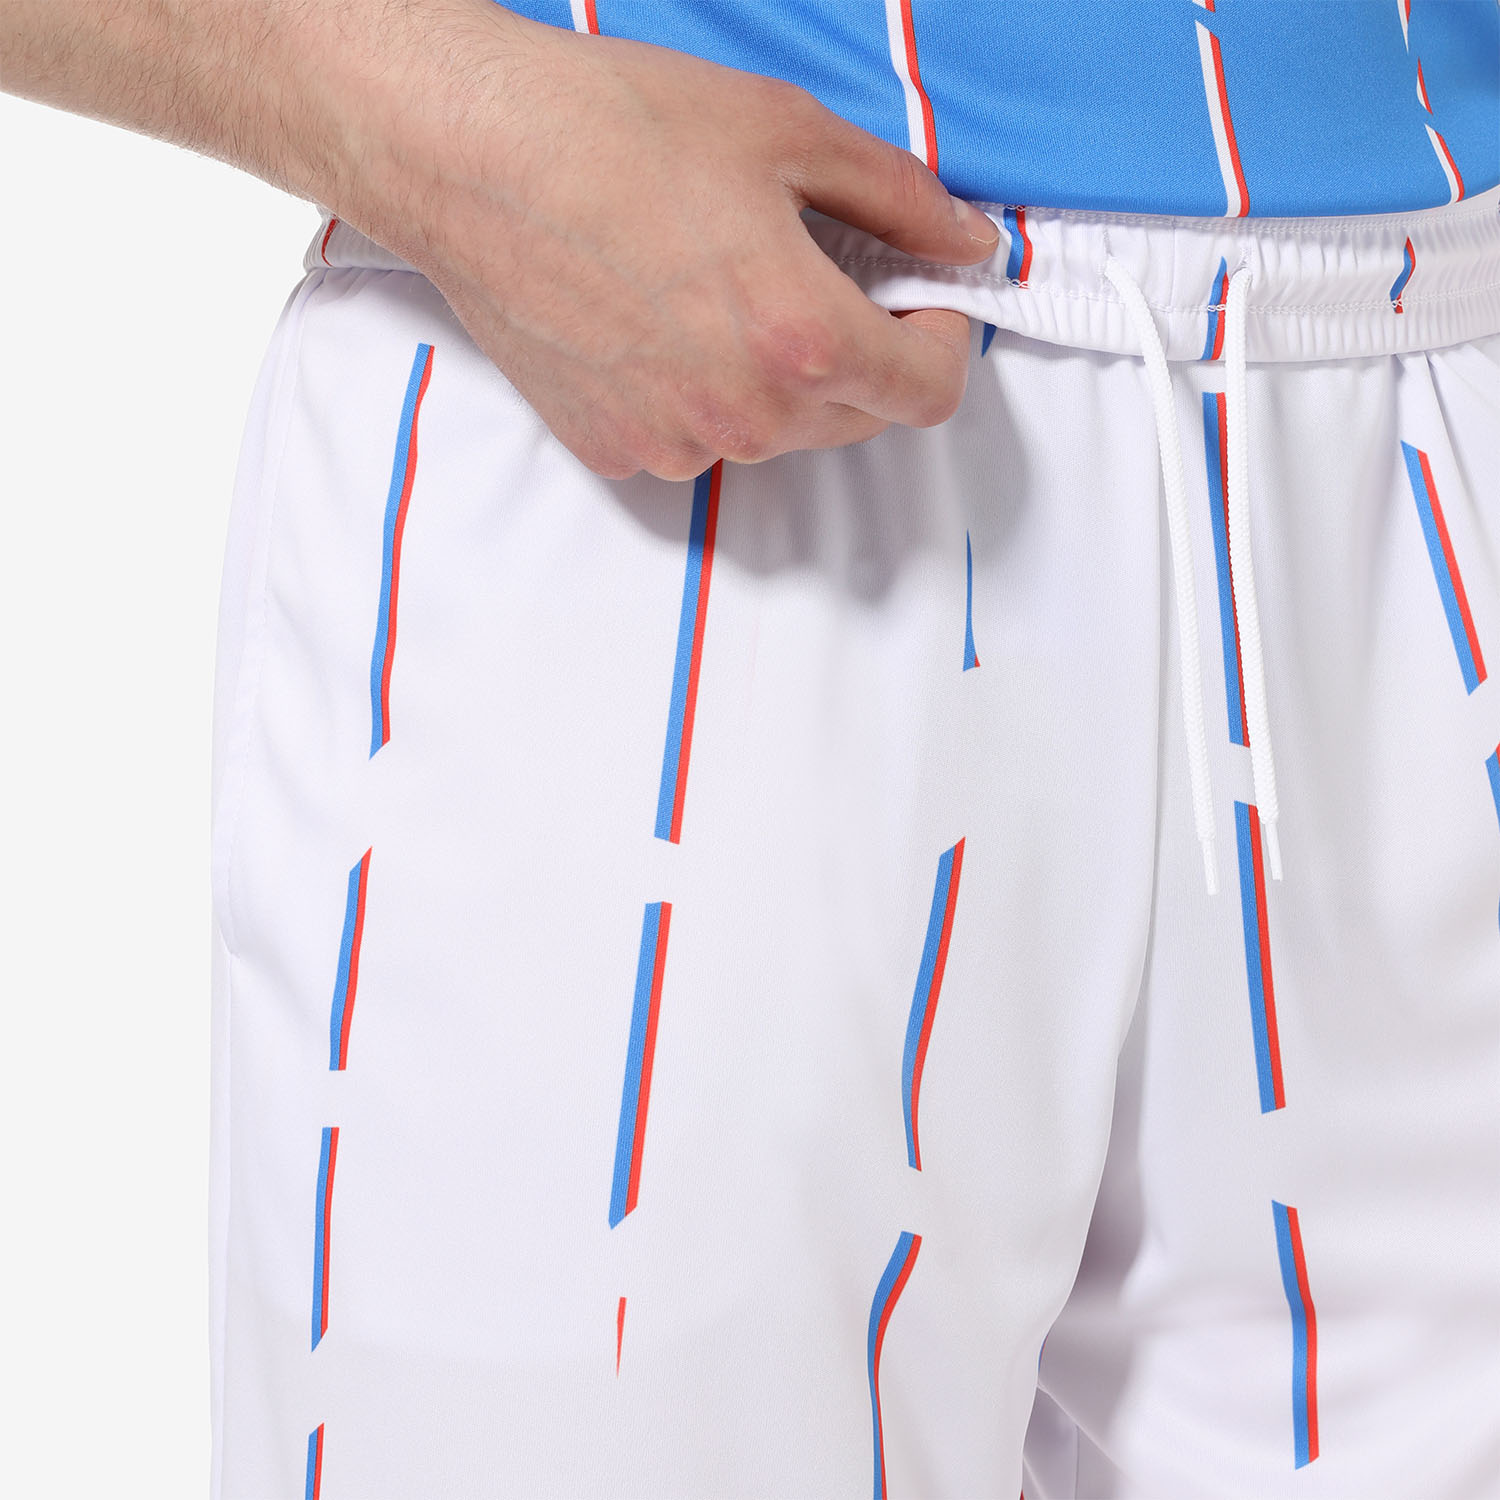 Australian Stripes Ace 7.5in Shorts - Bianco